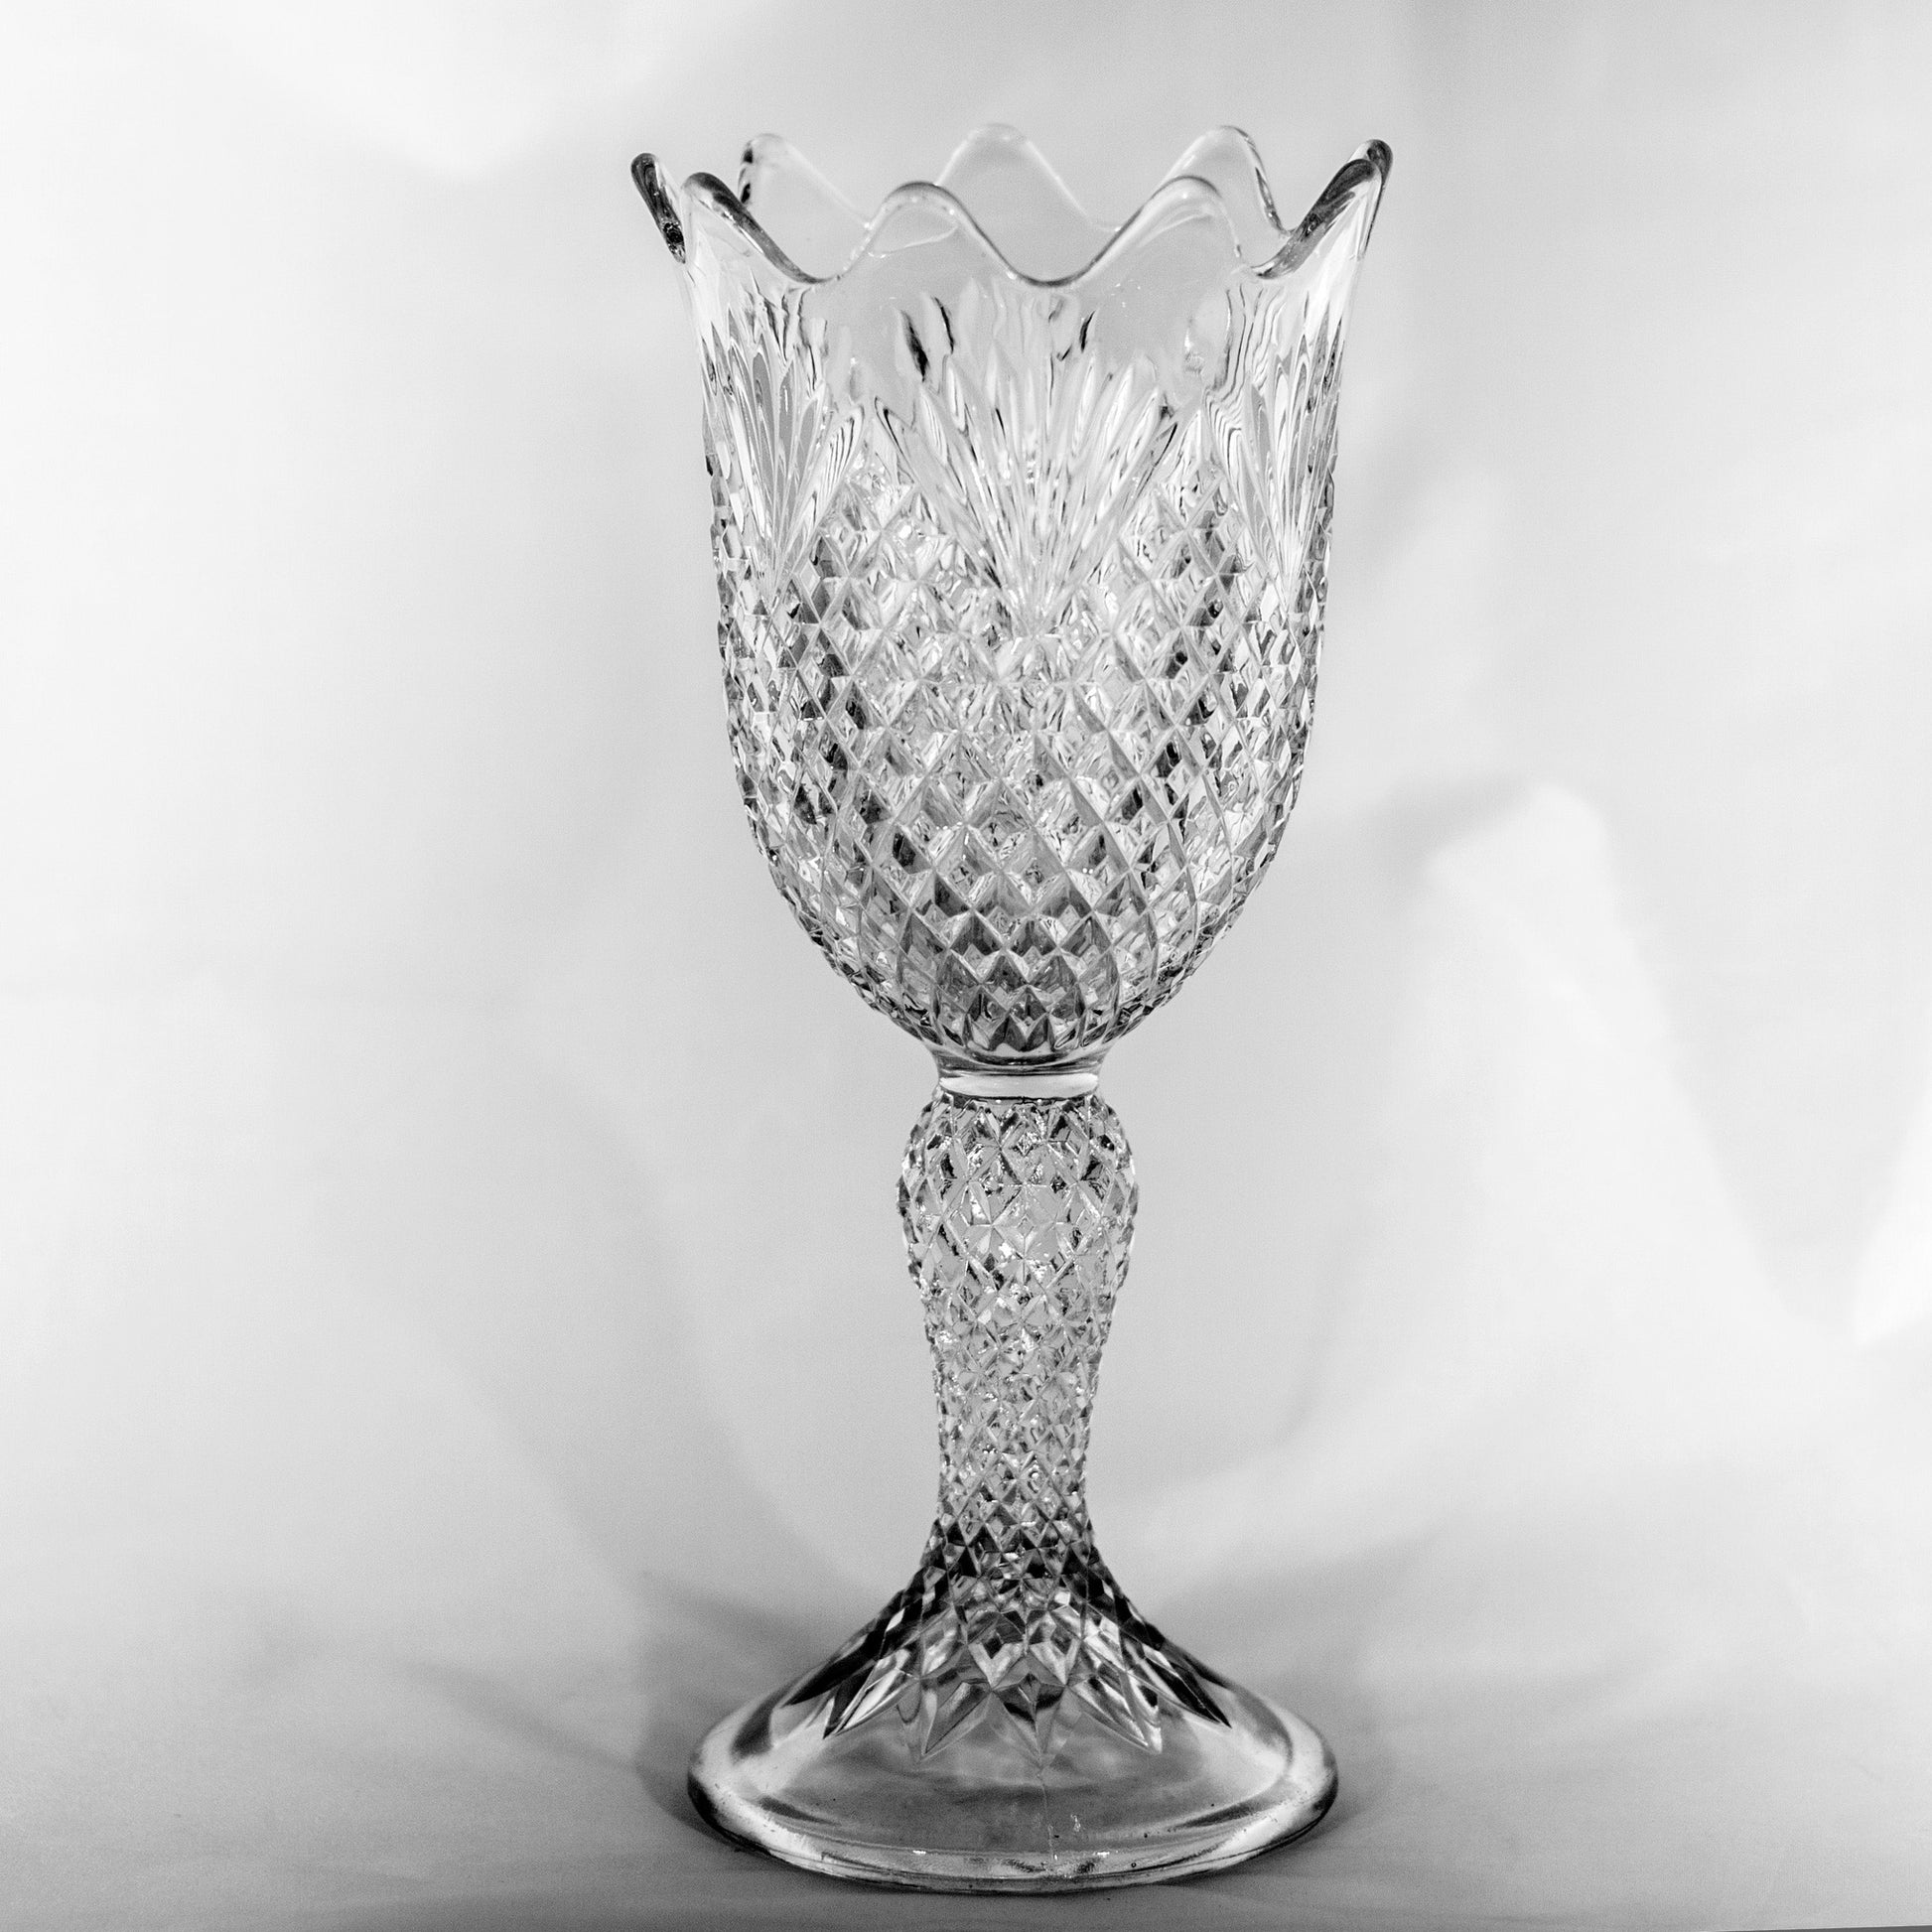 MODEL FLINT Shepherd’s Plaid AKA Pineapple & Fan Tall Pedestal Vase or Rose Bowl Circa Late 1800s